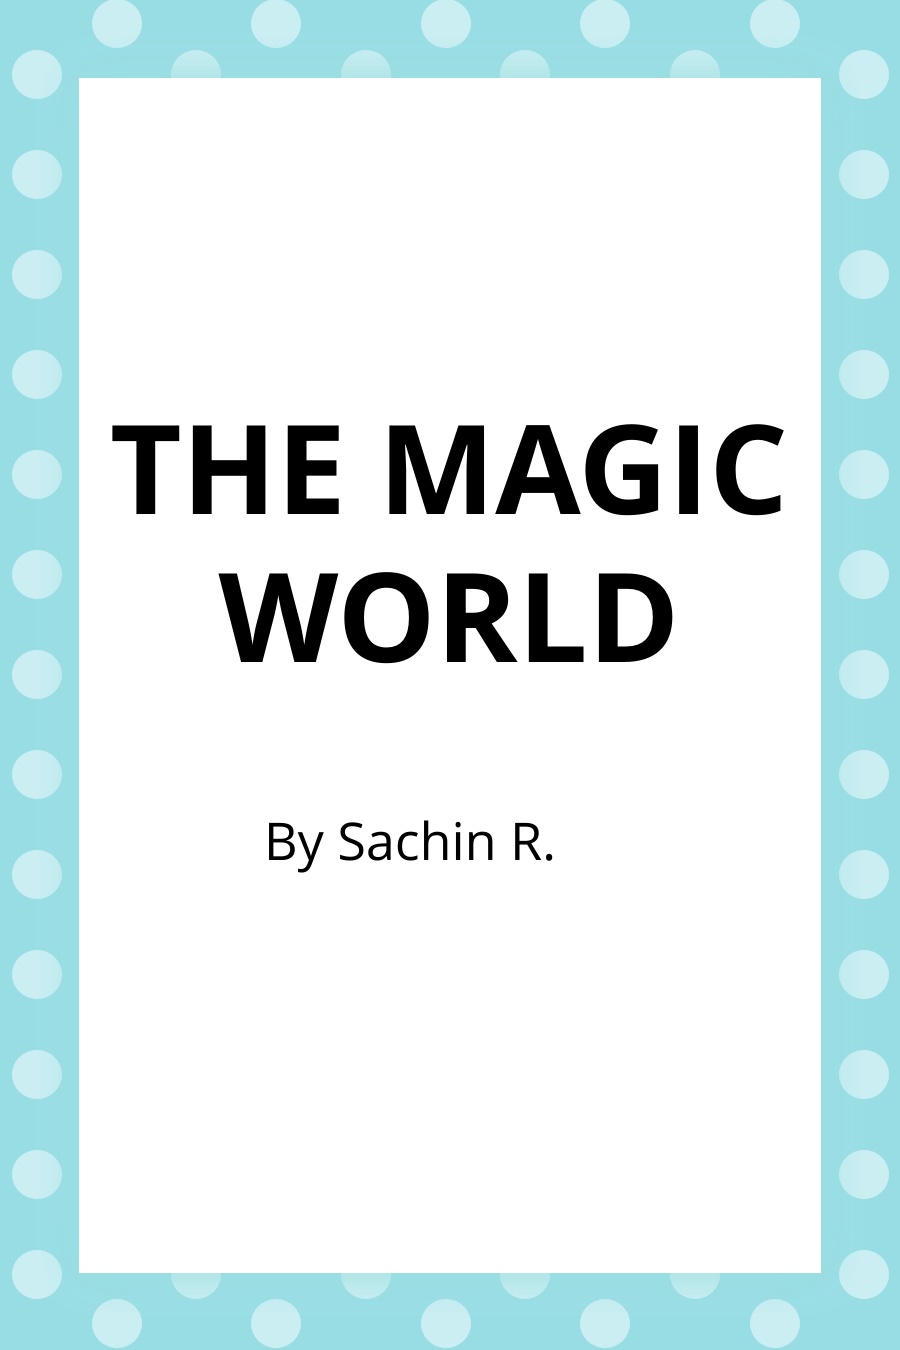 The Magic World by Sachin R